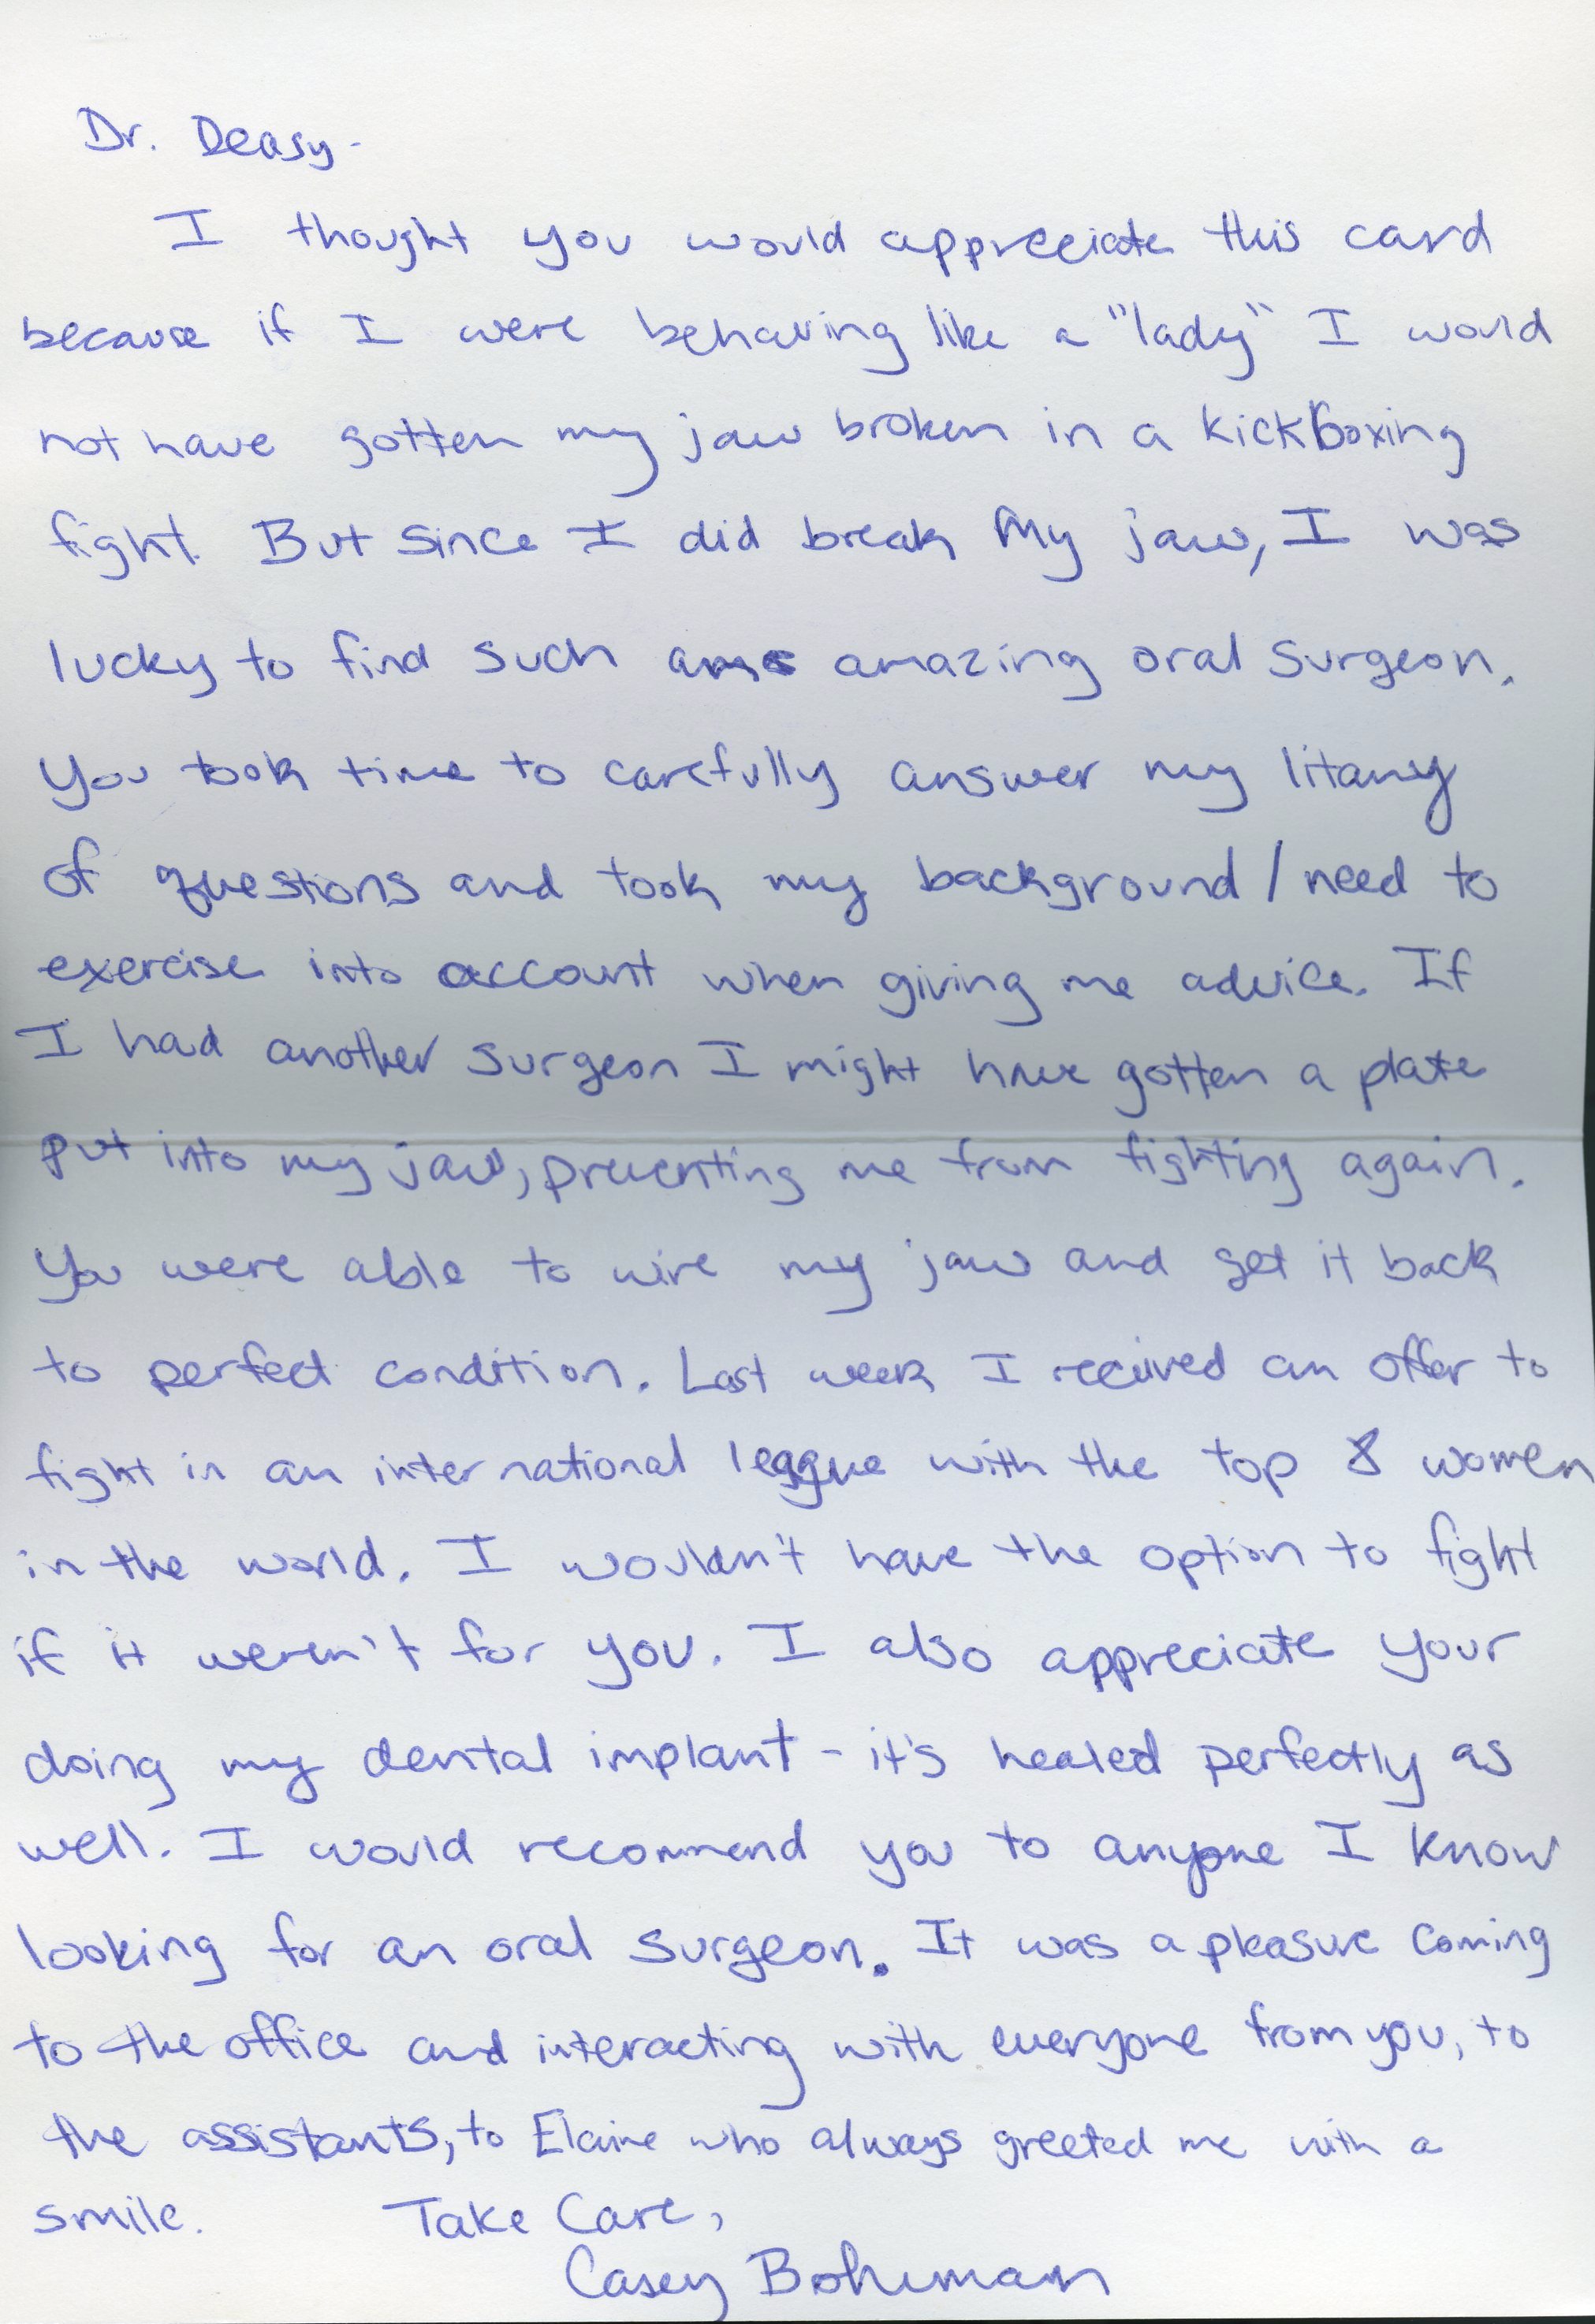 Image of a written patient testimonial